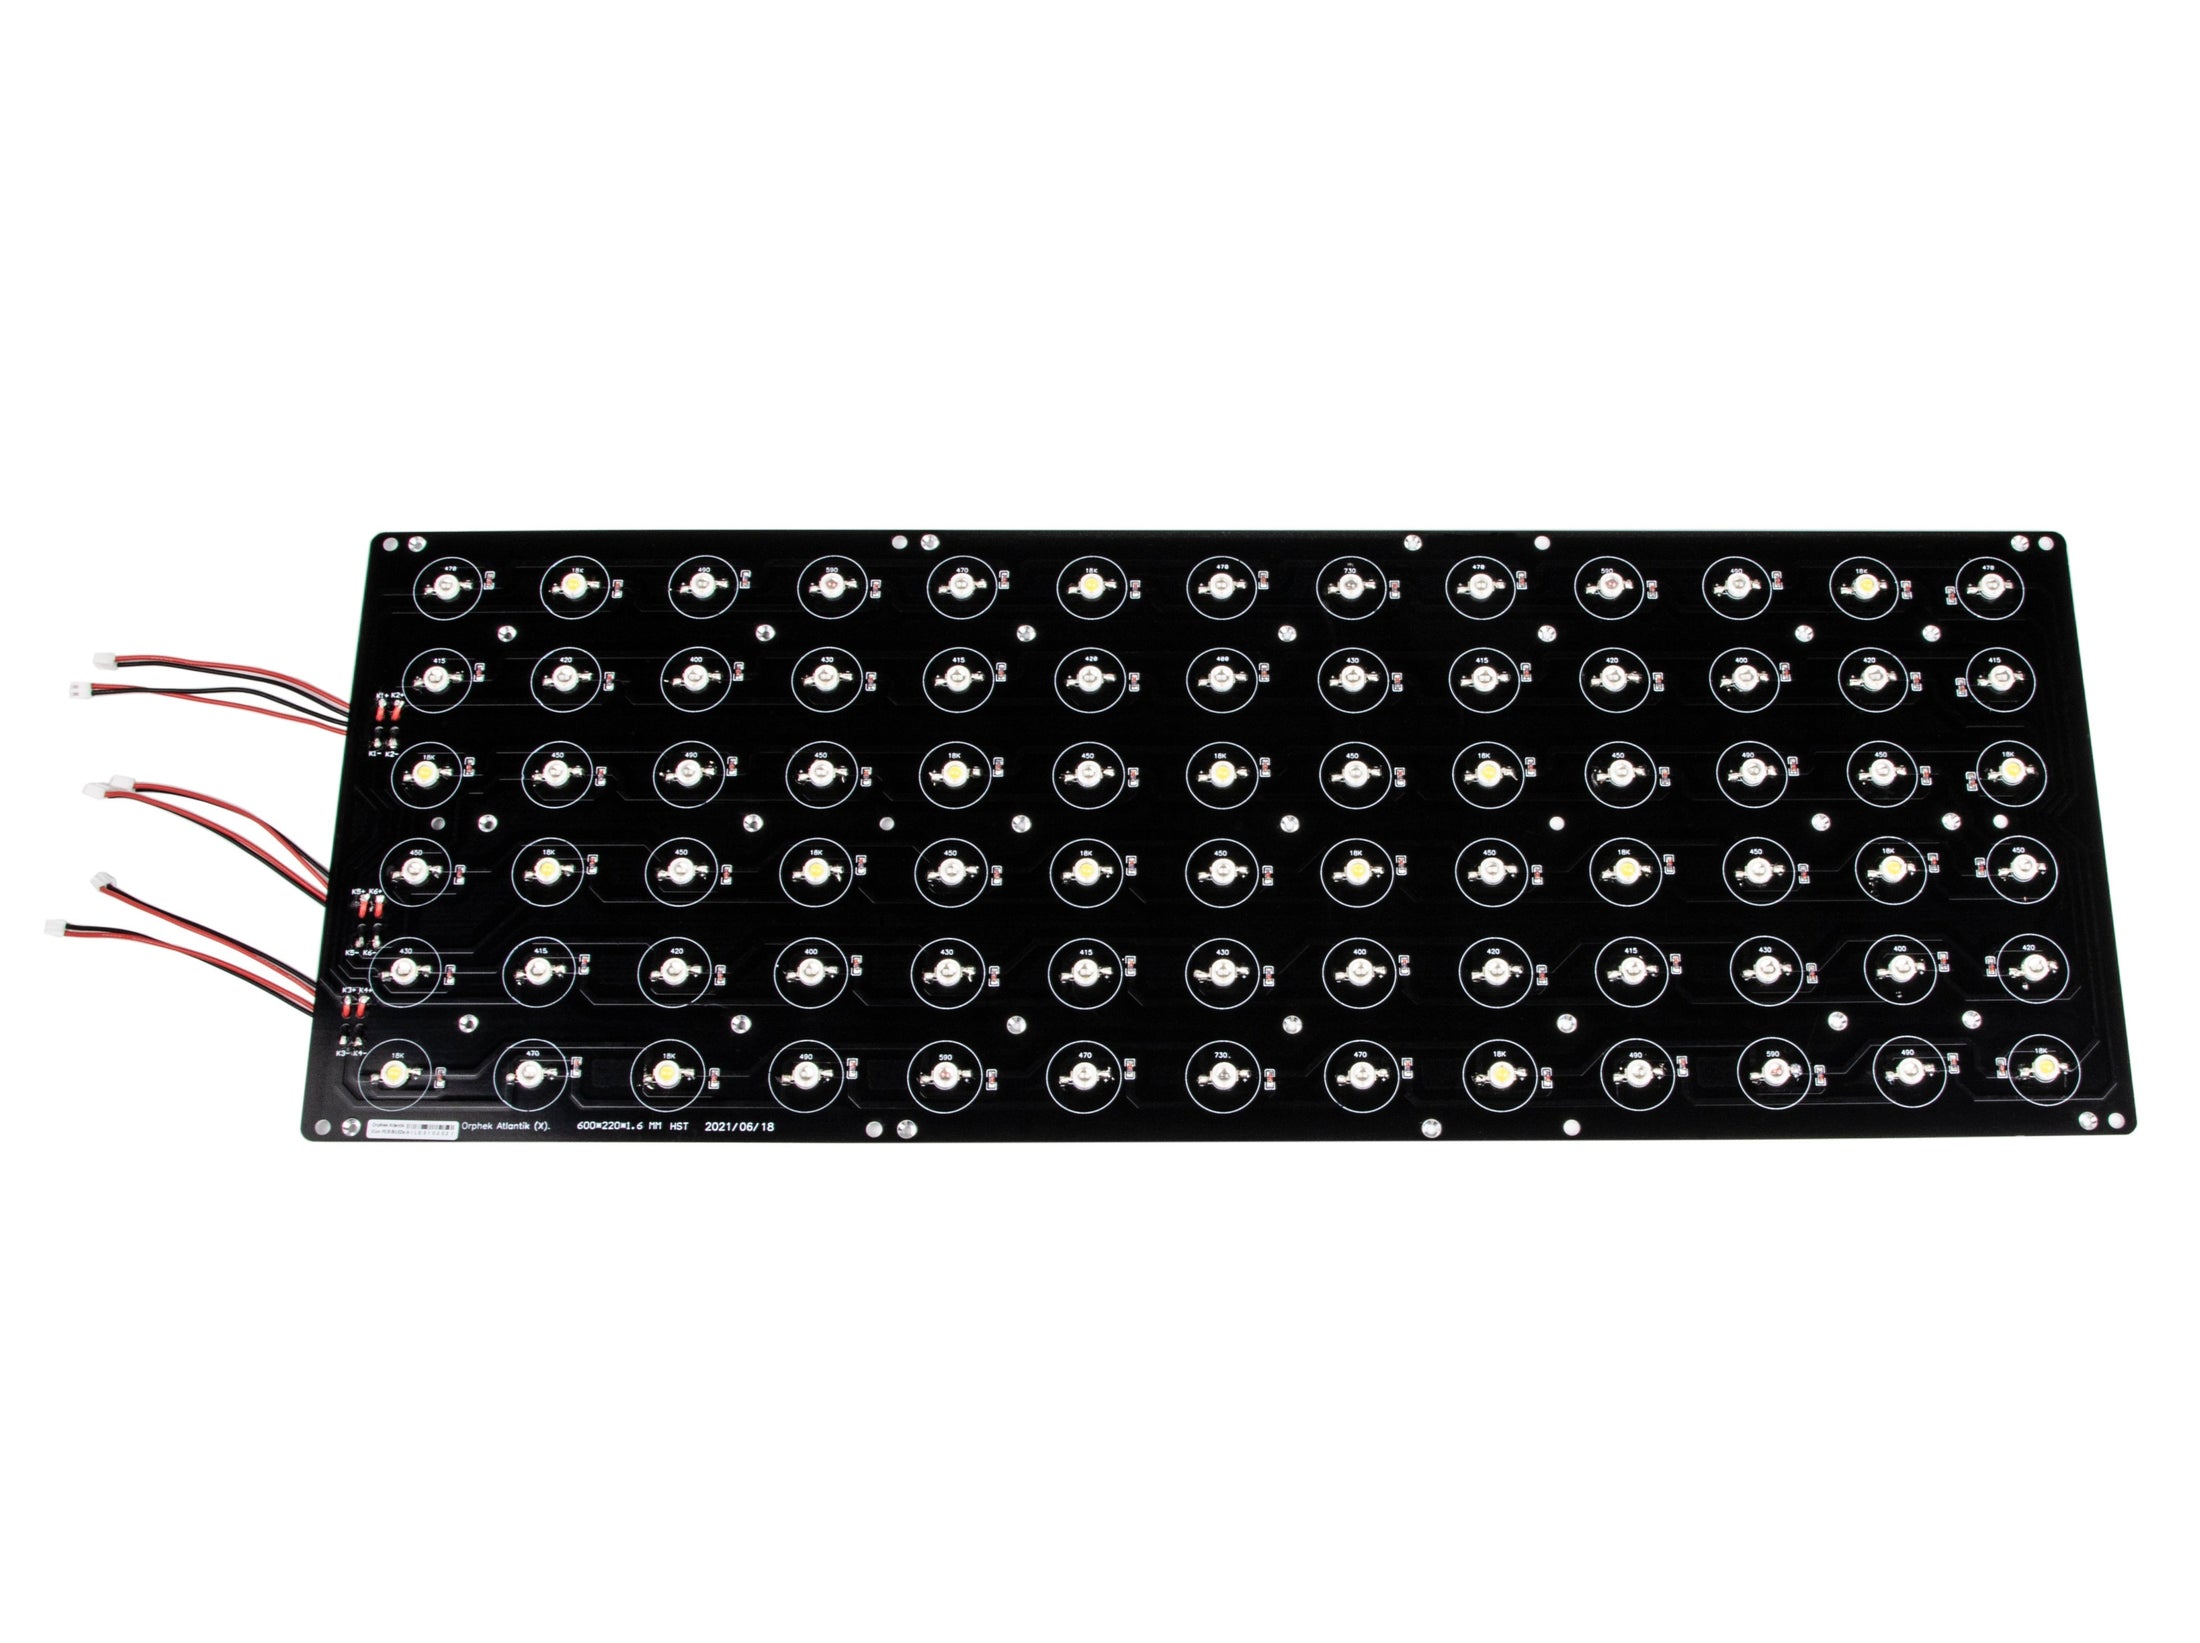 Upgrade LED PCB Kit to Atlantik iCon